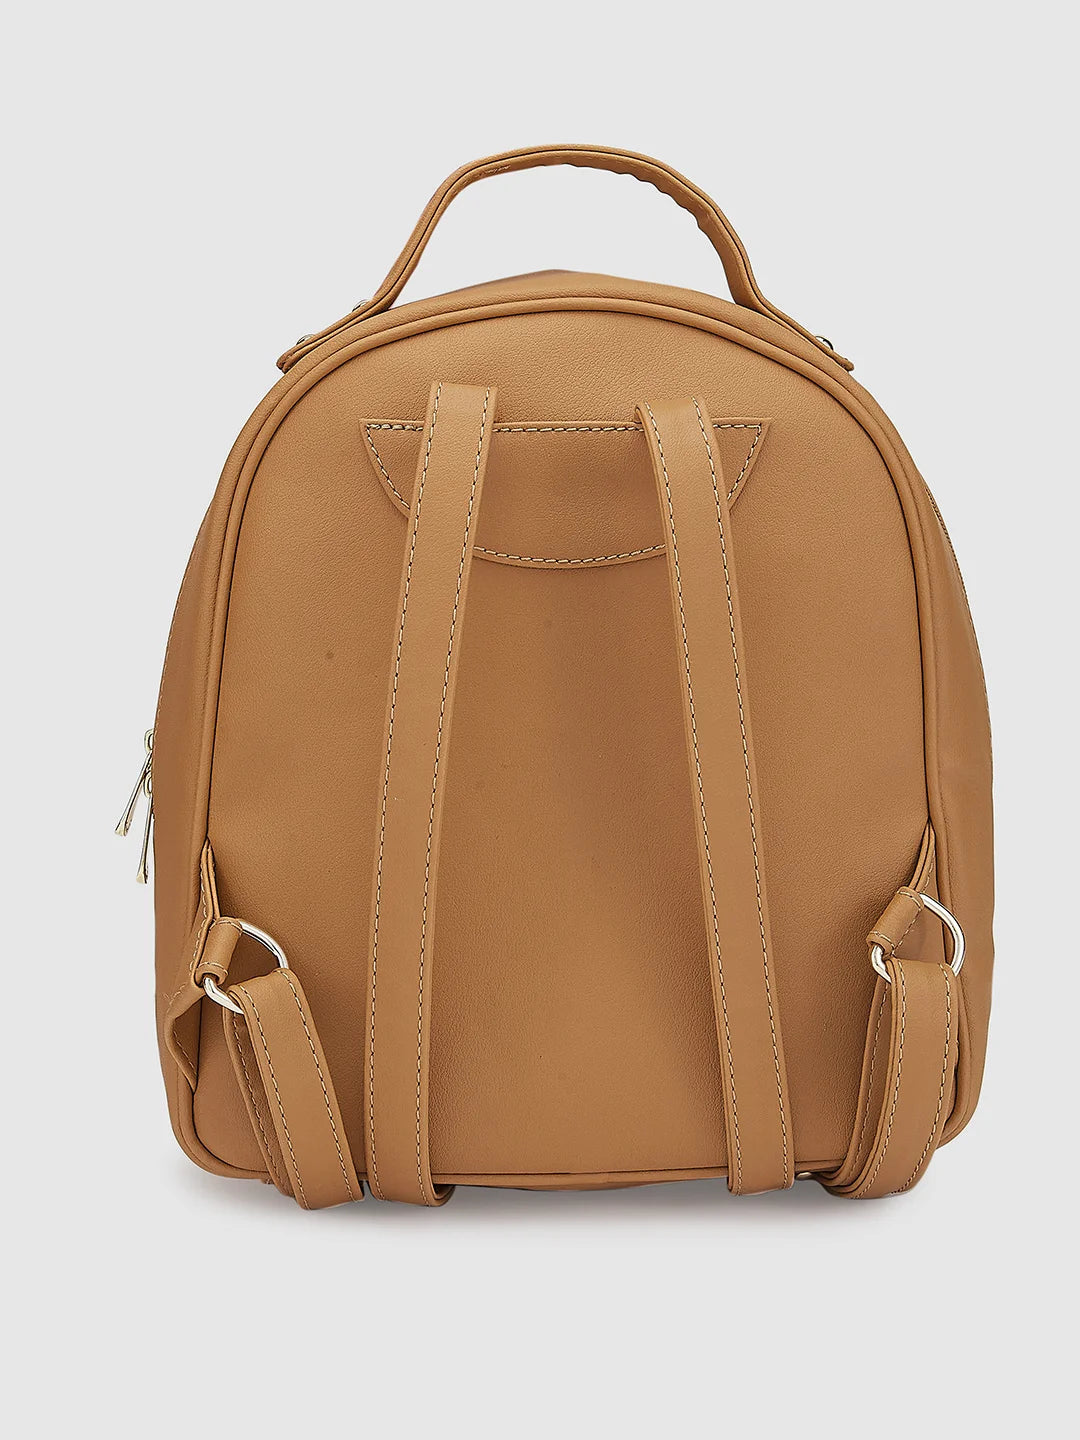 Fioretta Italian Genuine Leather Top Handle Backpack Handbag For Women - Tan  Brown